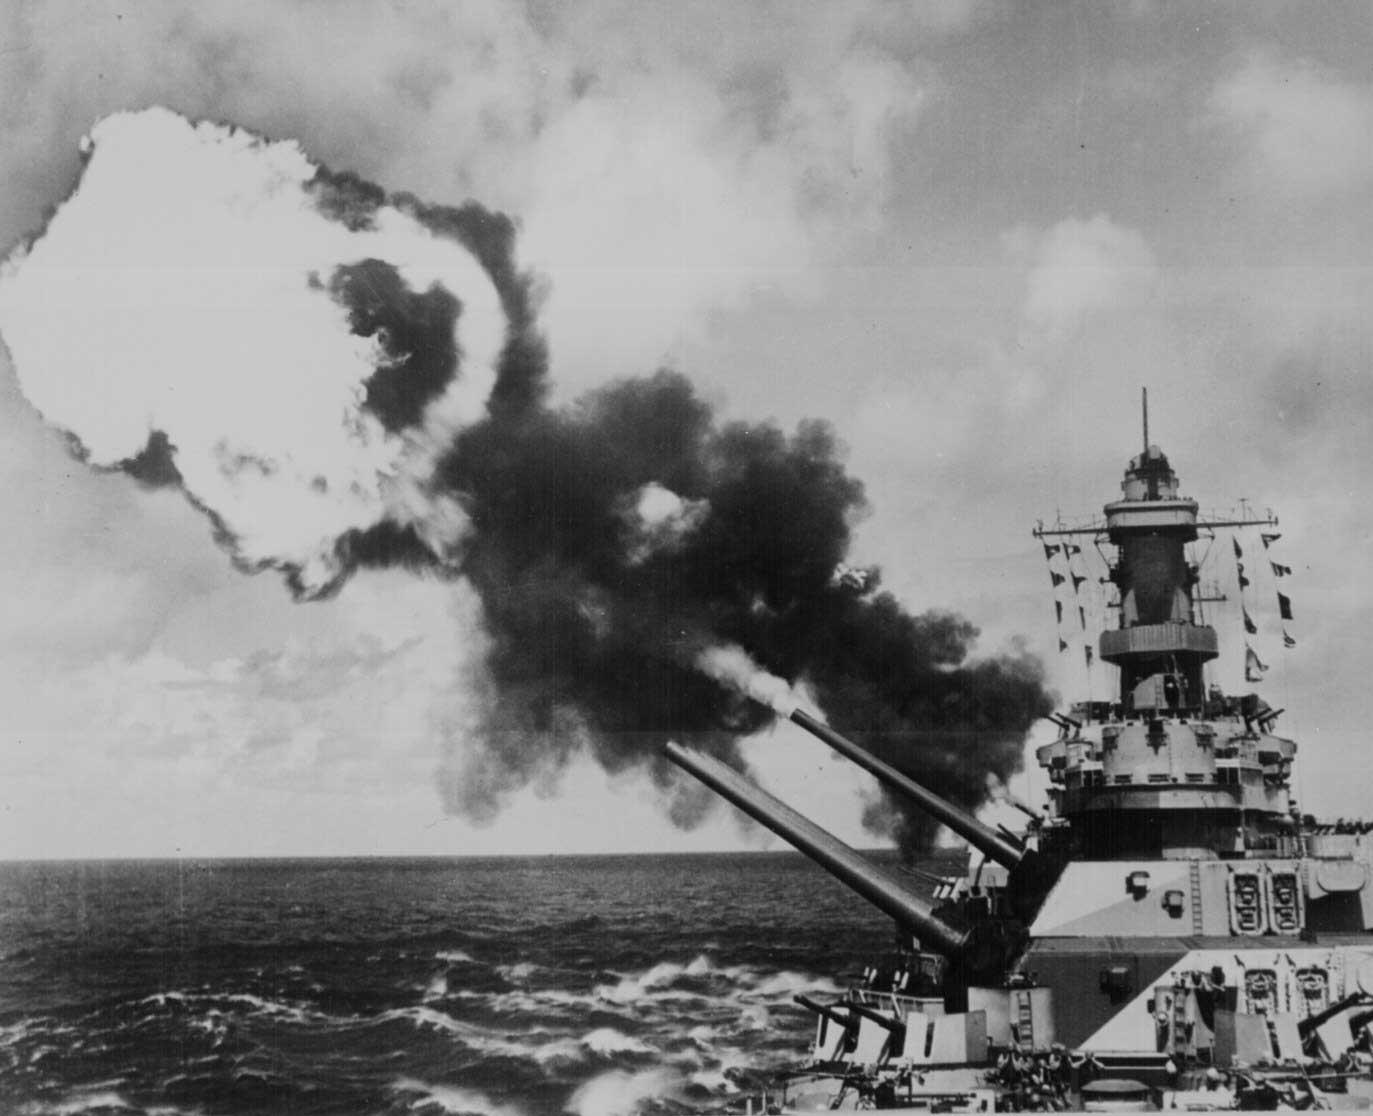 Battleship Iowa firing her 16-inch primary guns during a drill in the Pacific Ocean, circa 1944